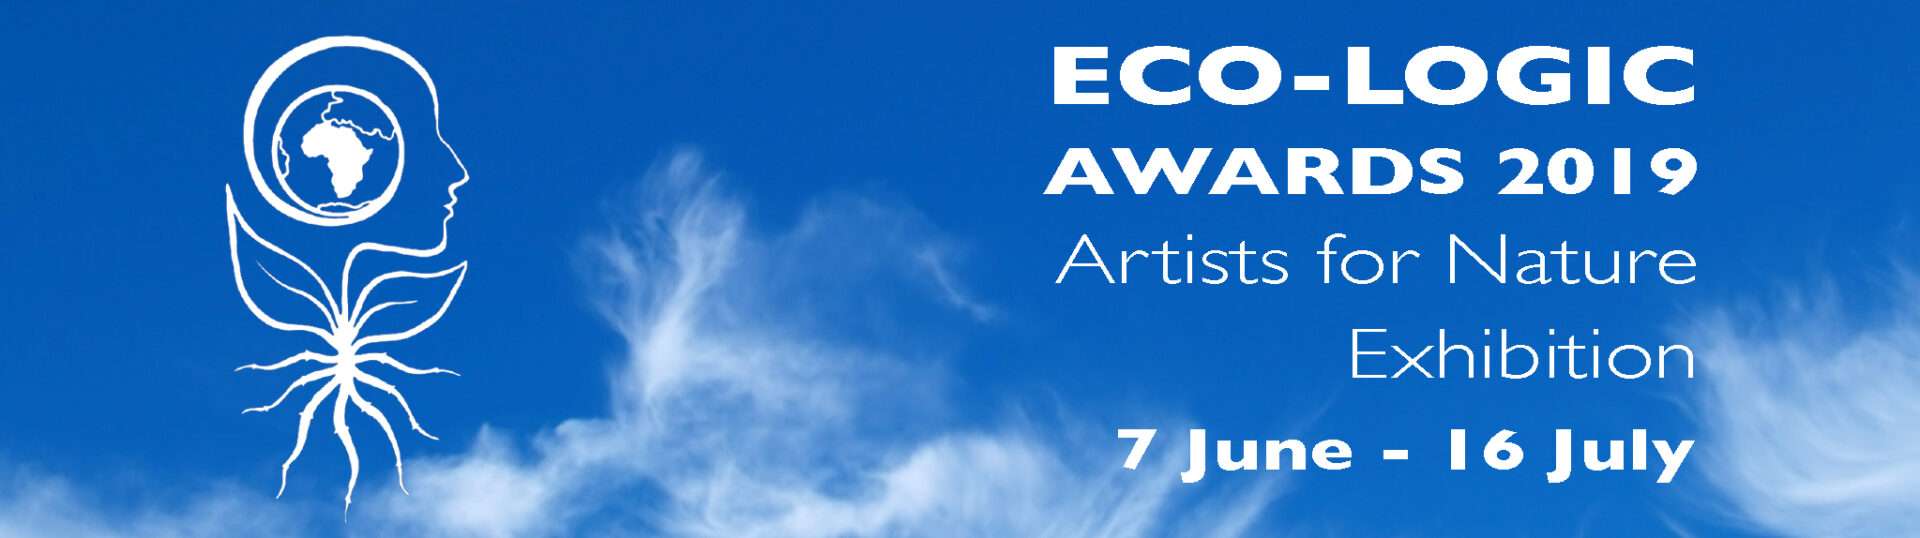 The Studio Art Gallery - Exhibition-Header-Eco-Logic-Awards-2019